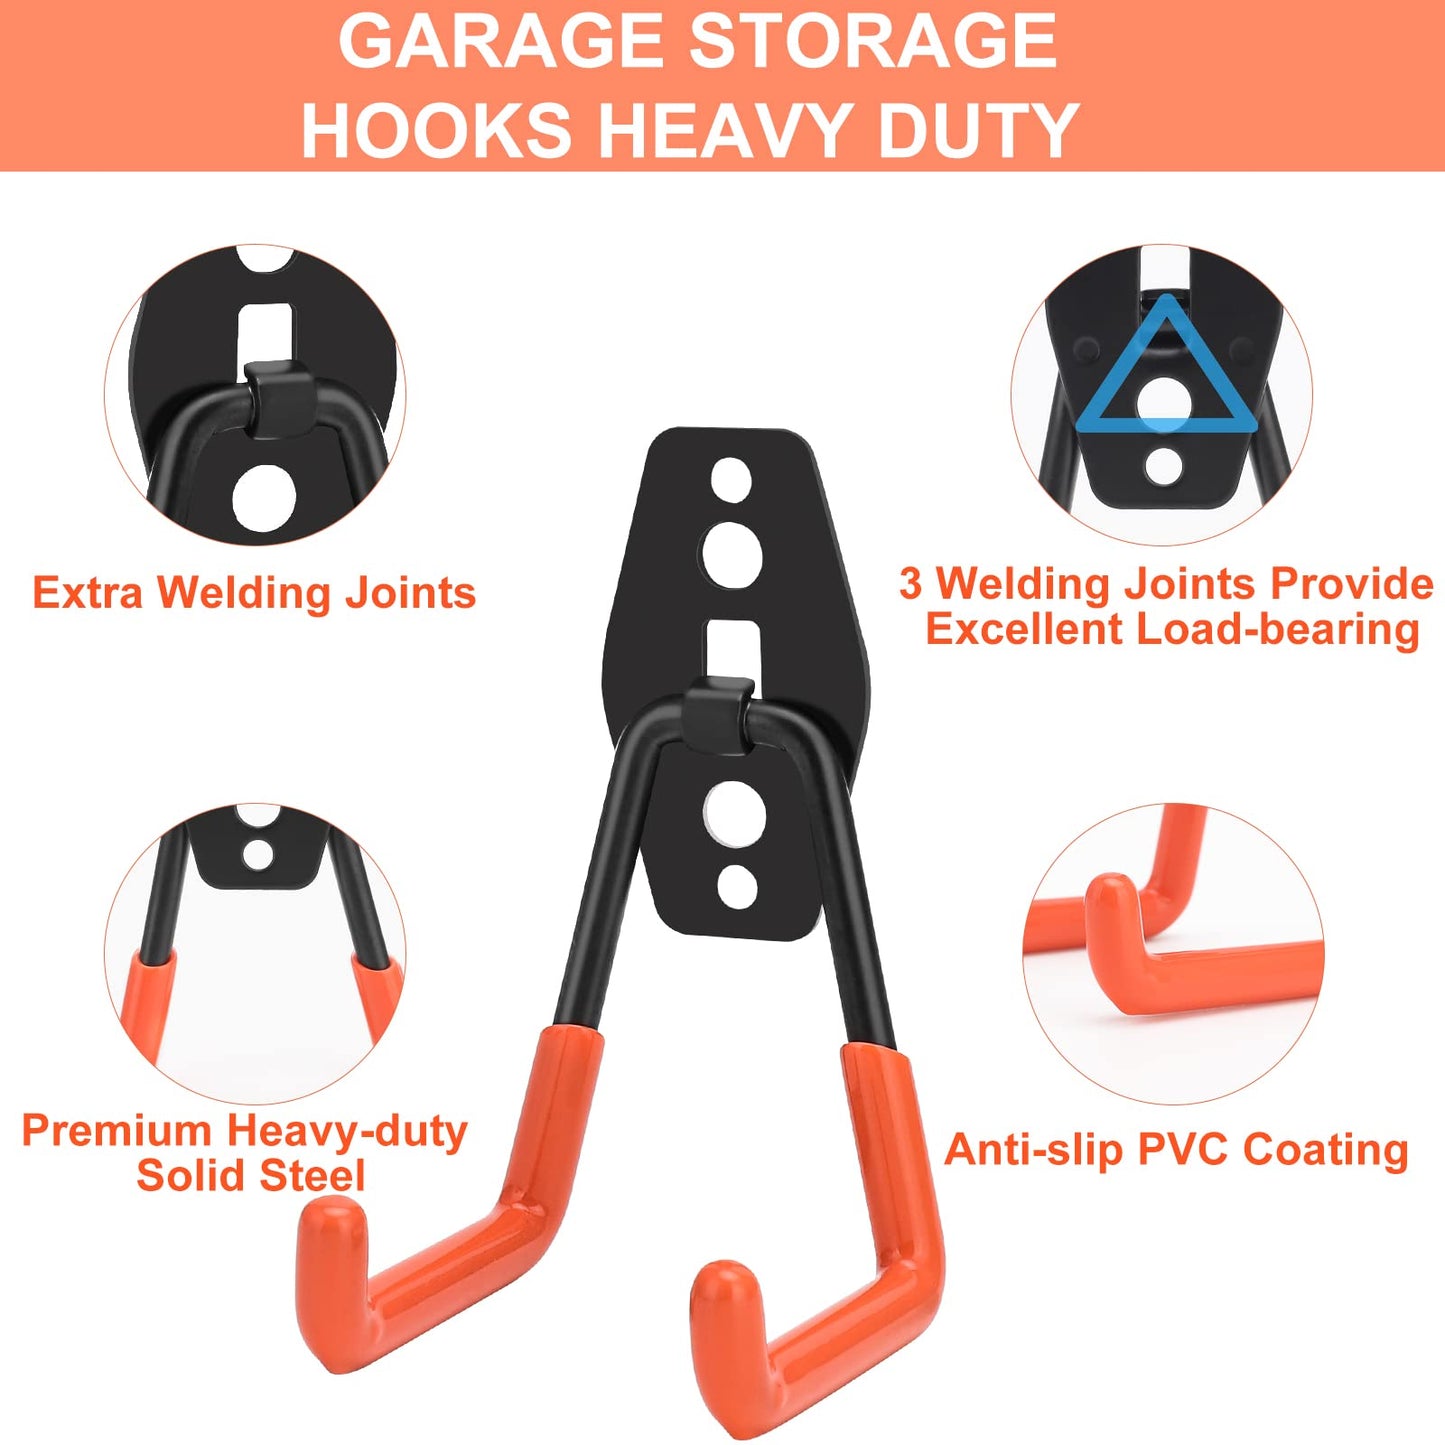 Dorisy Upgraded 16 Packs Garage Hooks Utility Double Heavy Duty with Mop Broom Holders, Wall Mount Hooks, Garage Storage Organization and Tool